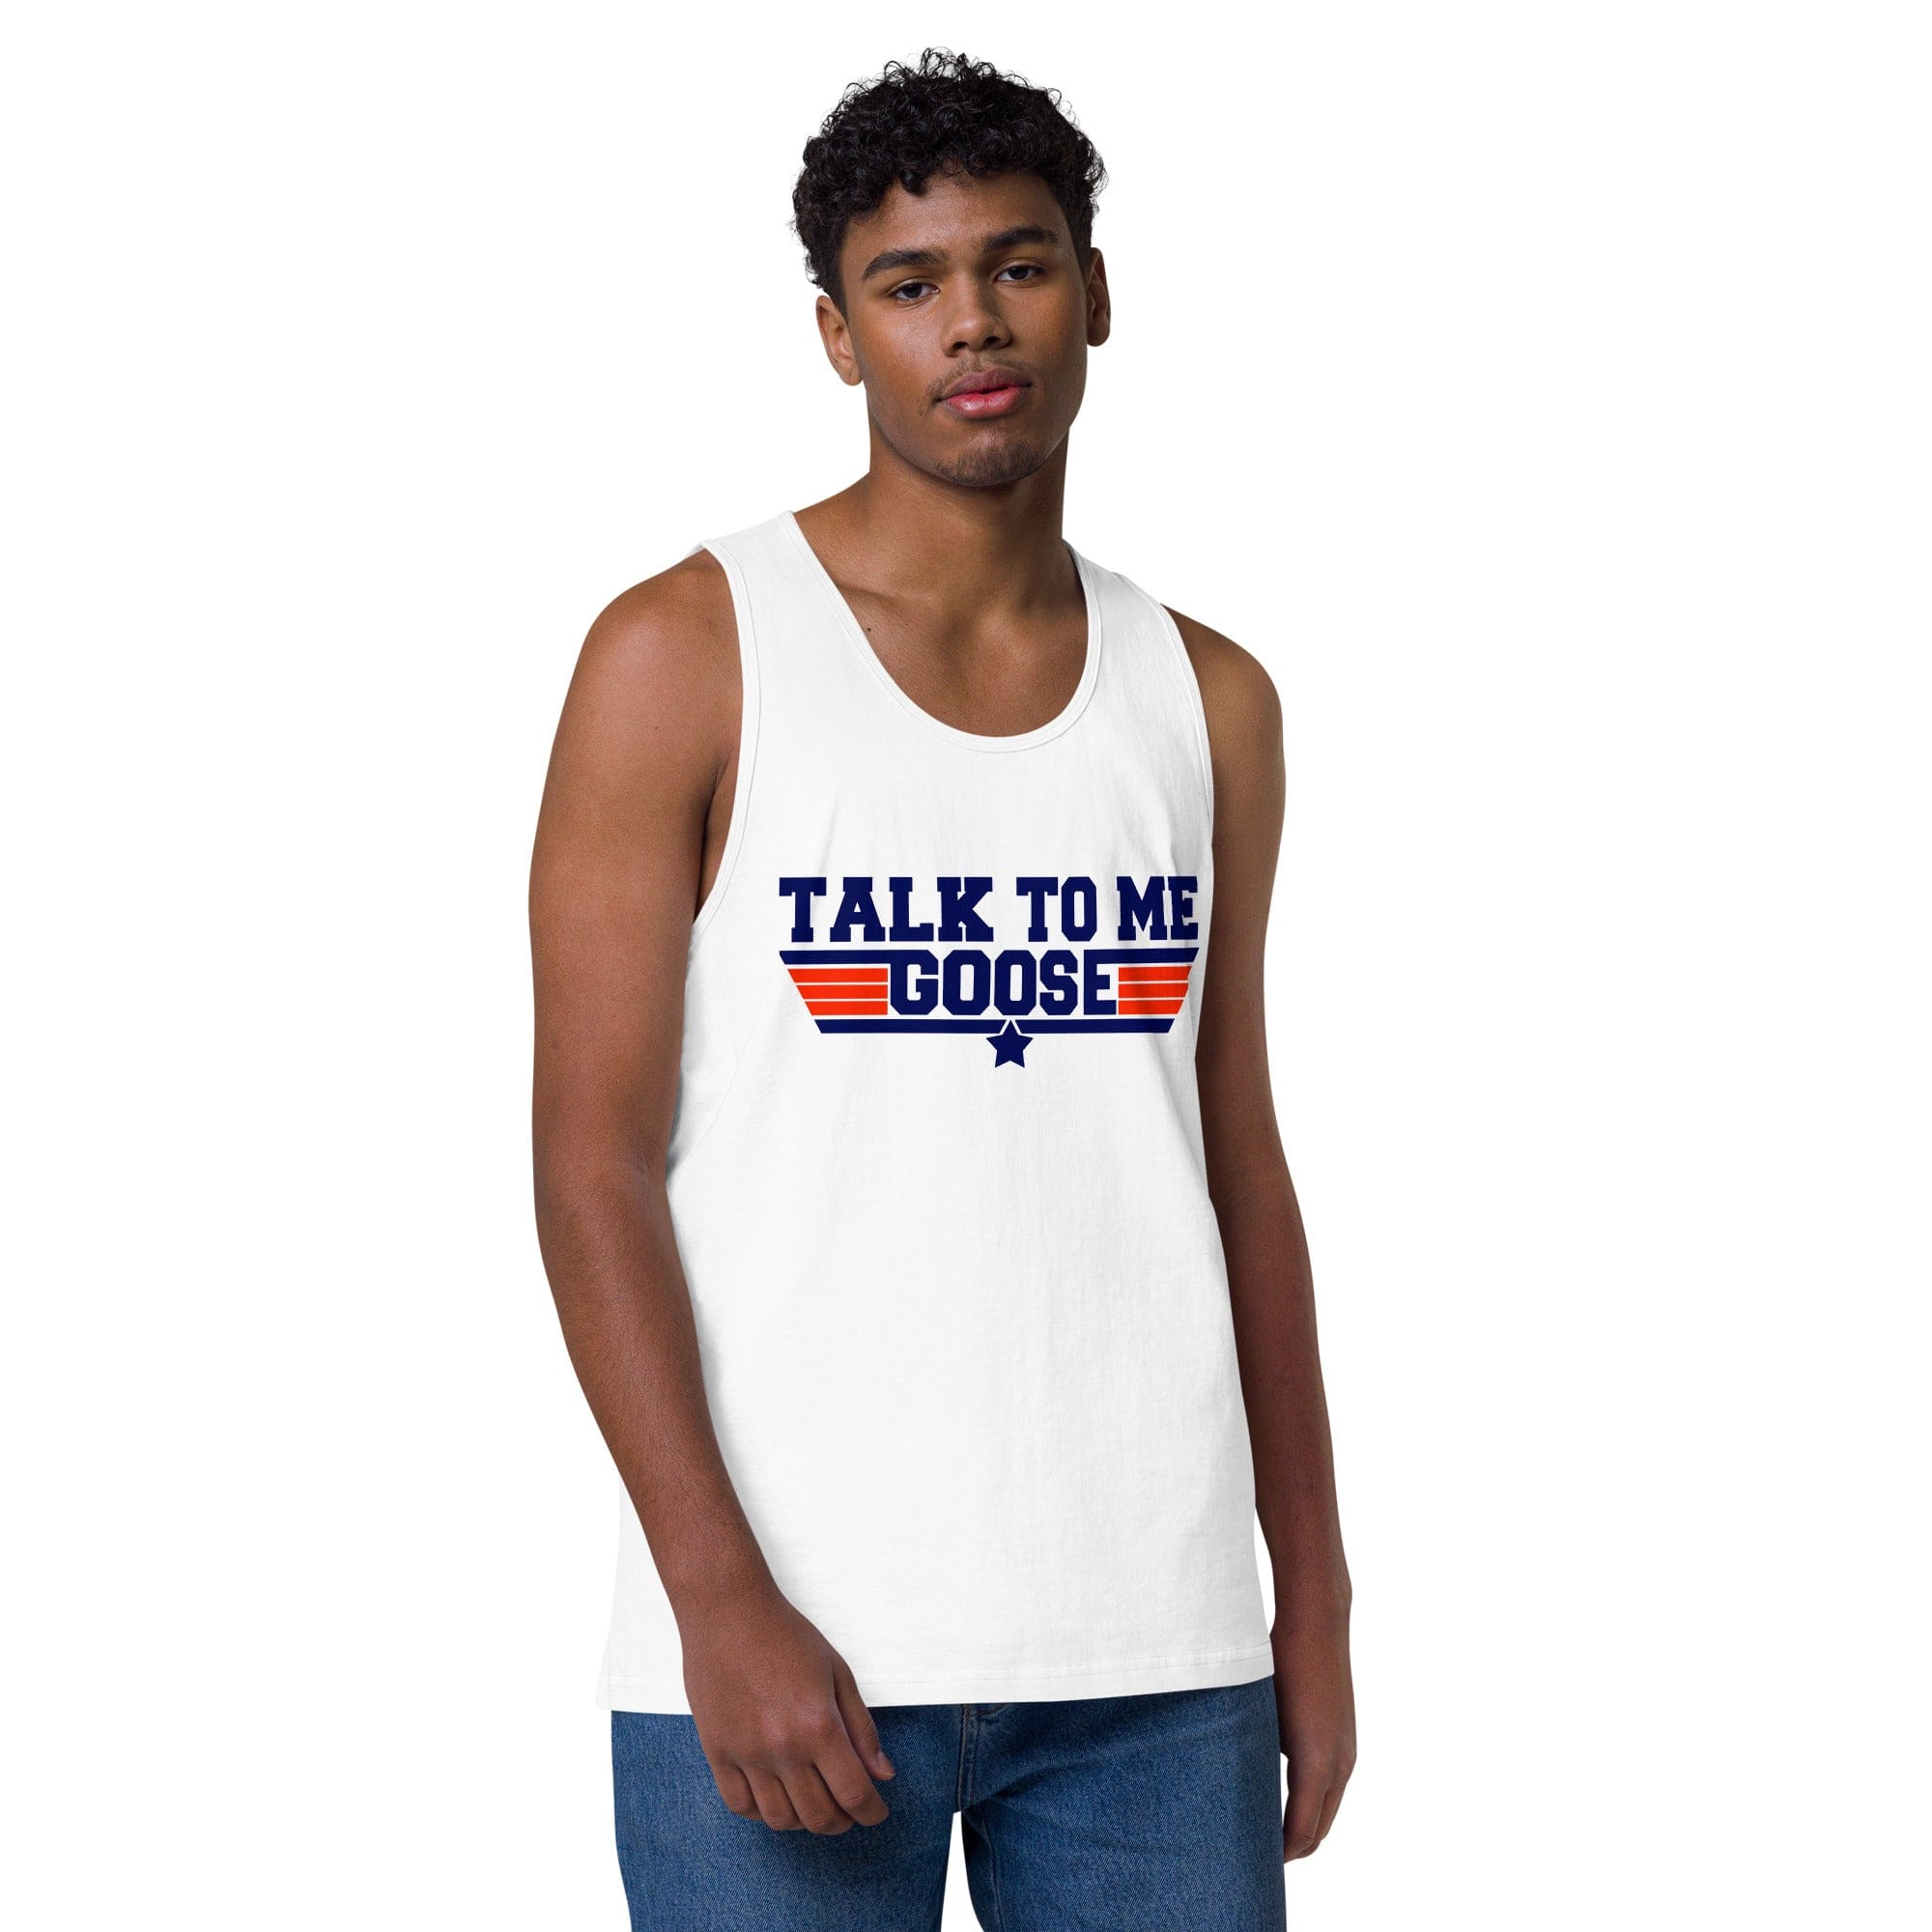 Top Gun Fans Shirts & Tops Talk To Me Goose - Men’s Premium Tank Top